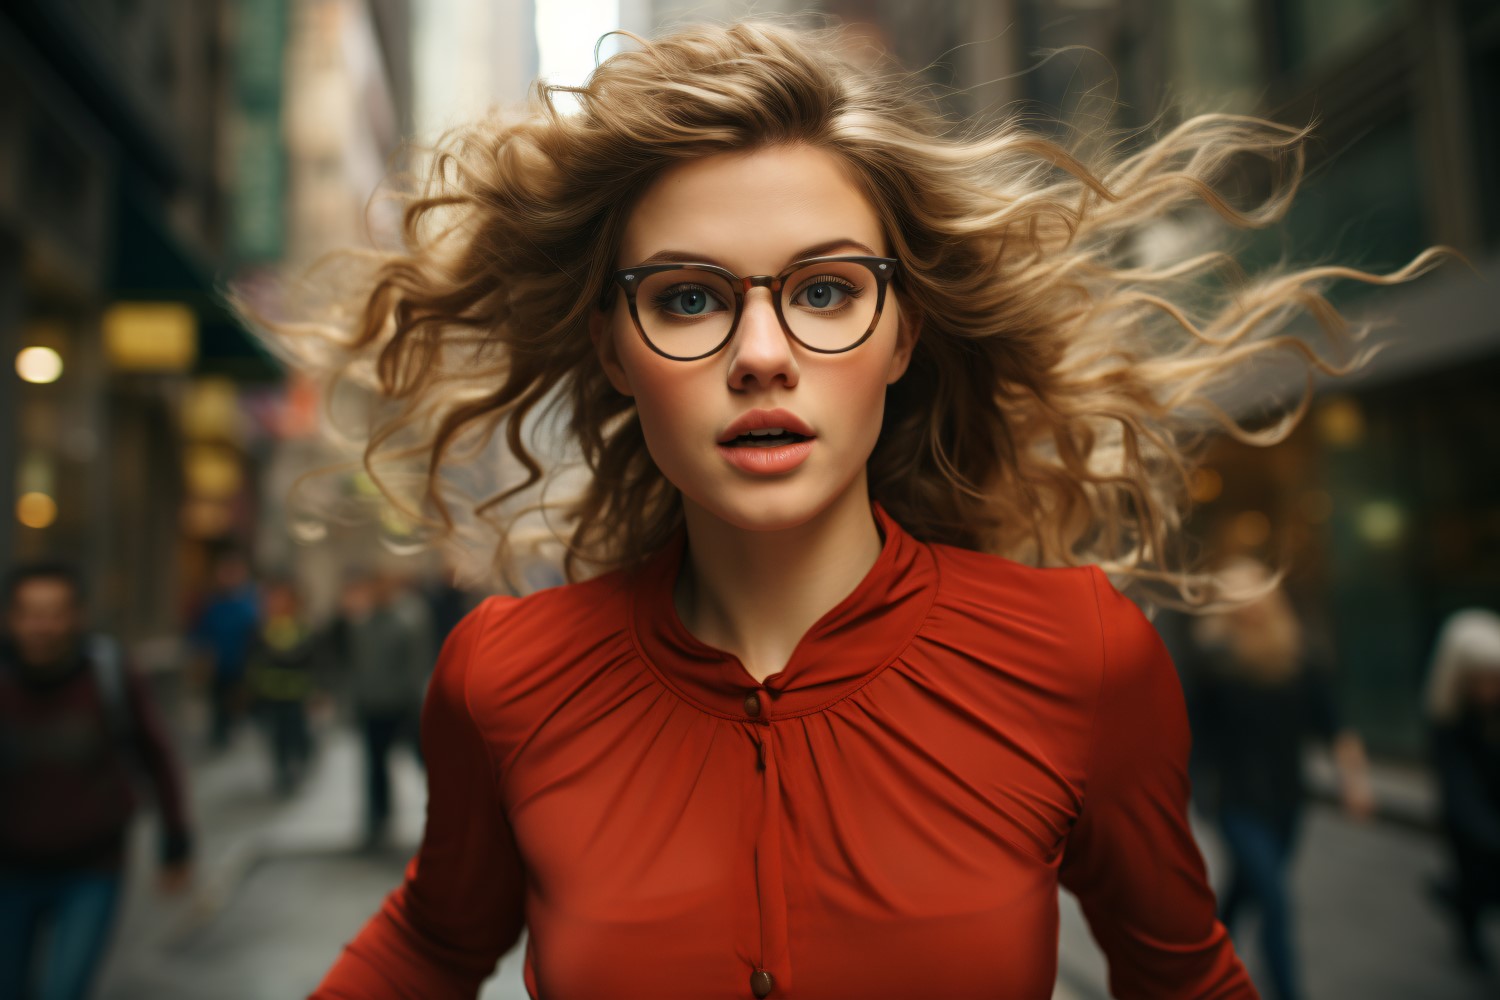 female superhero wearing red dress and running city street 12